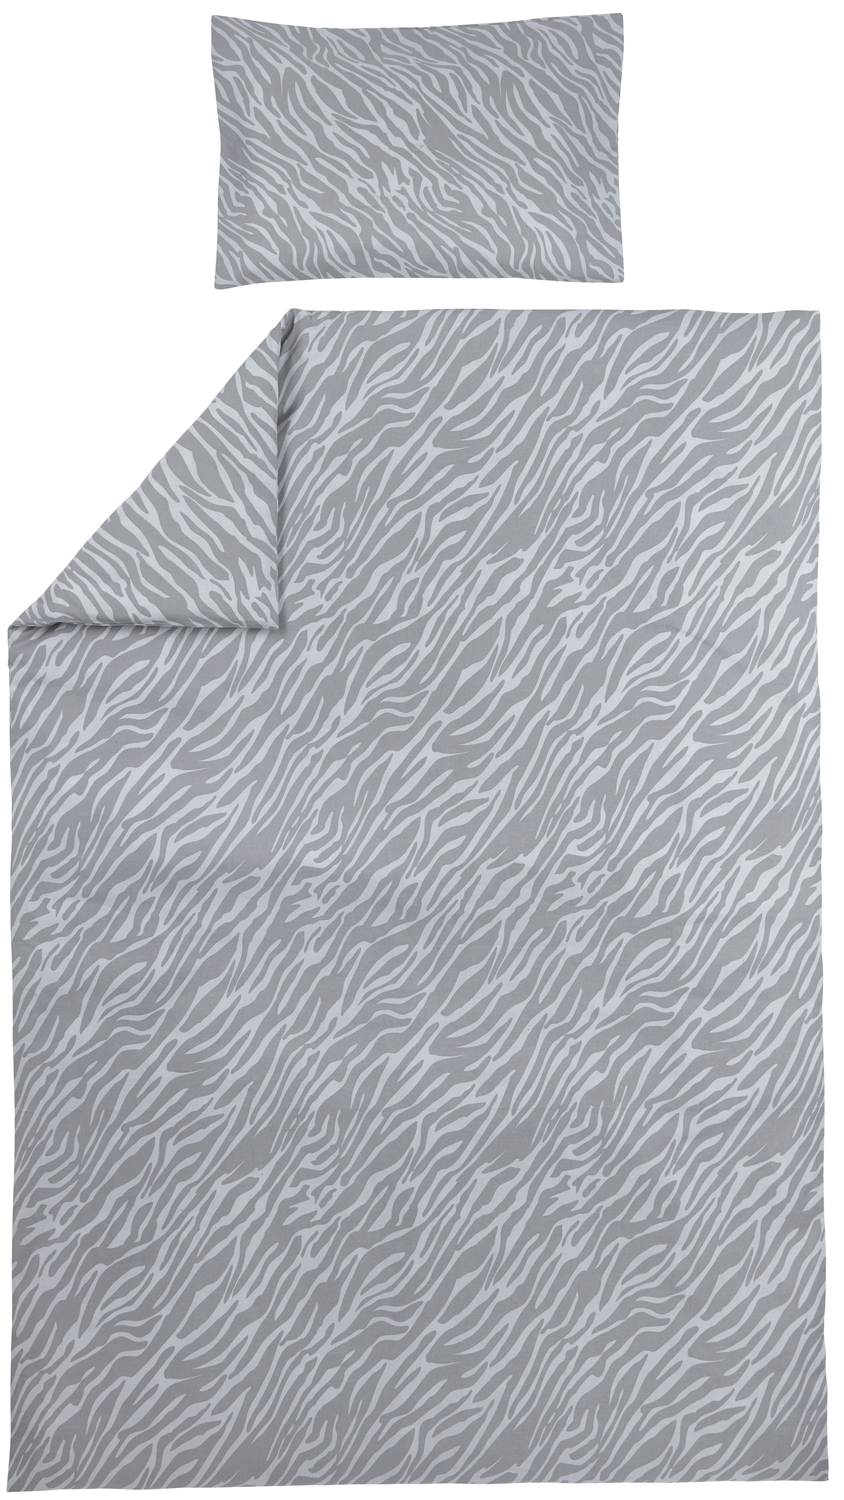 Duvet cover 1-Pers. Zebra - grey - 140x200/220cm